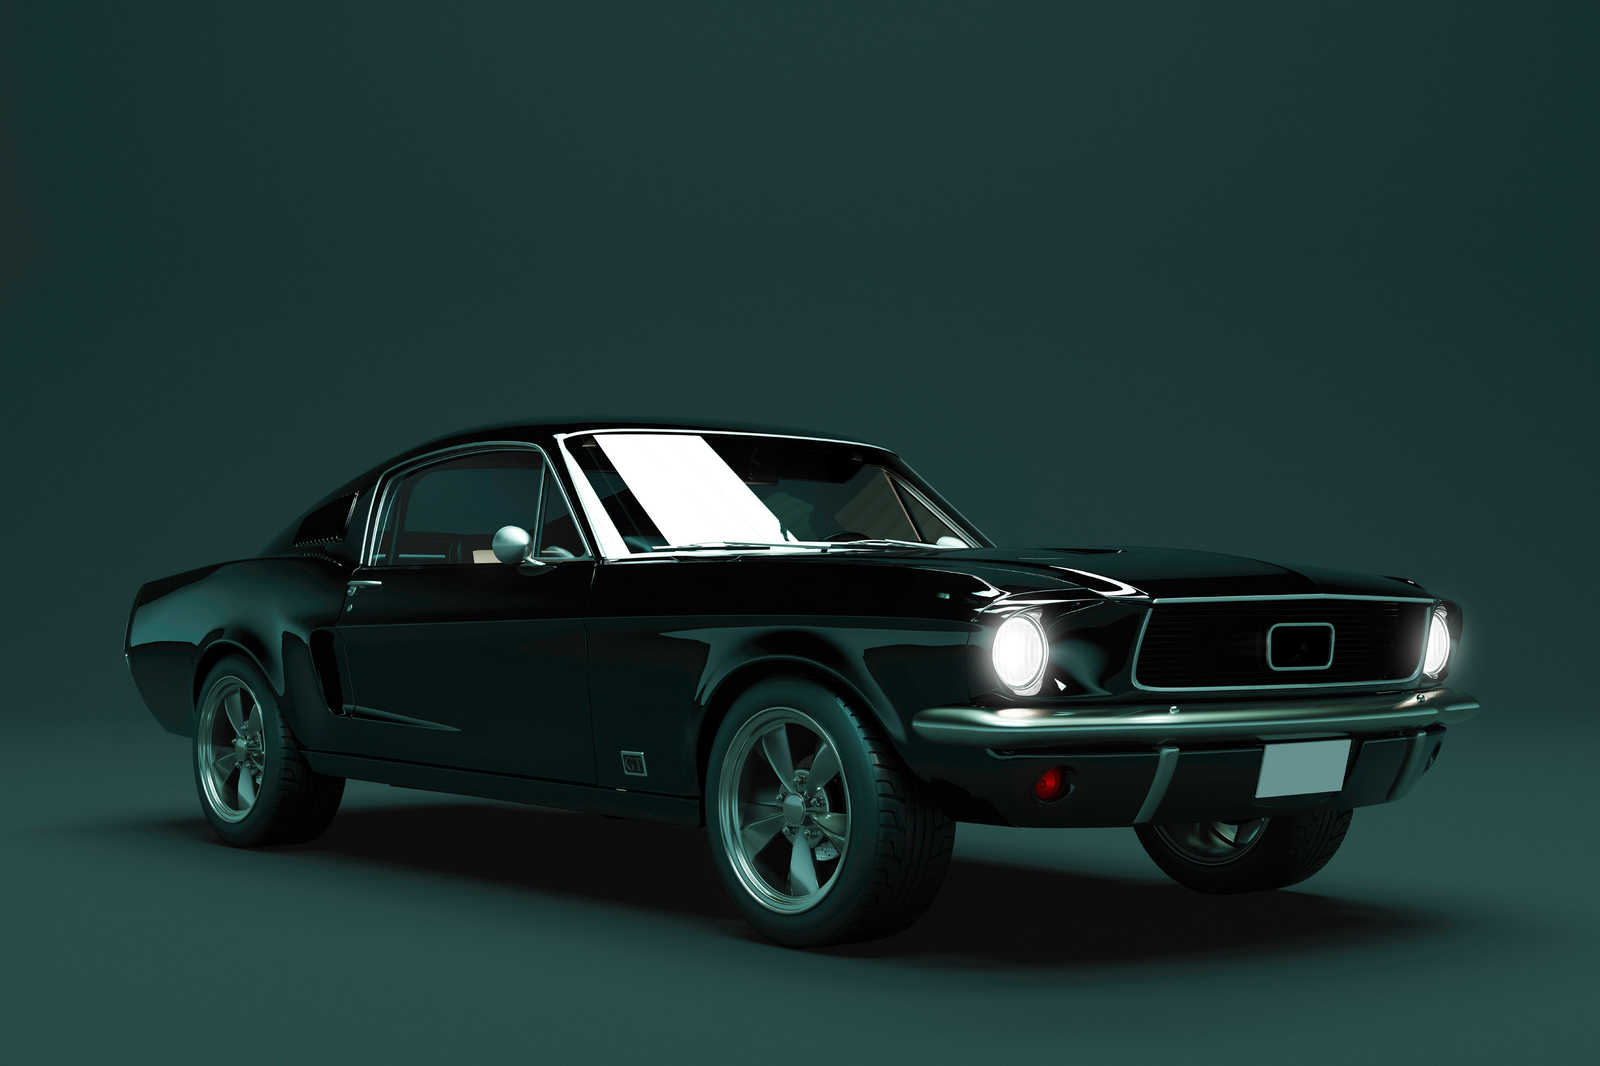             Mustang 2 - Quadro su tela, auto d'epoca Mustang 1968 - 0,90 m x 0,60 m
        